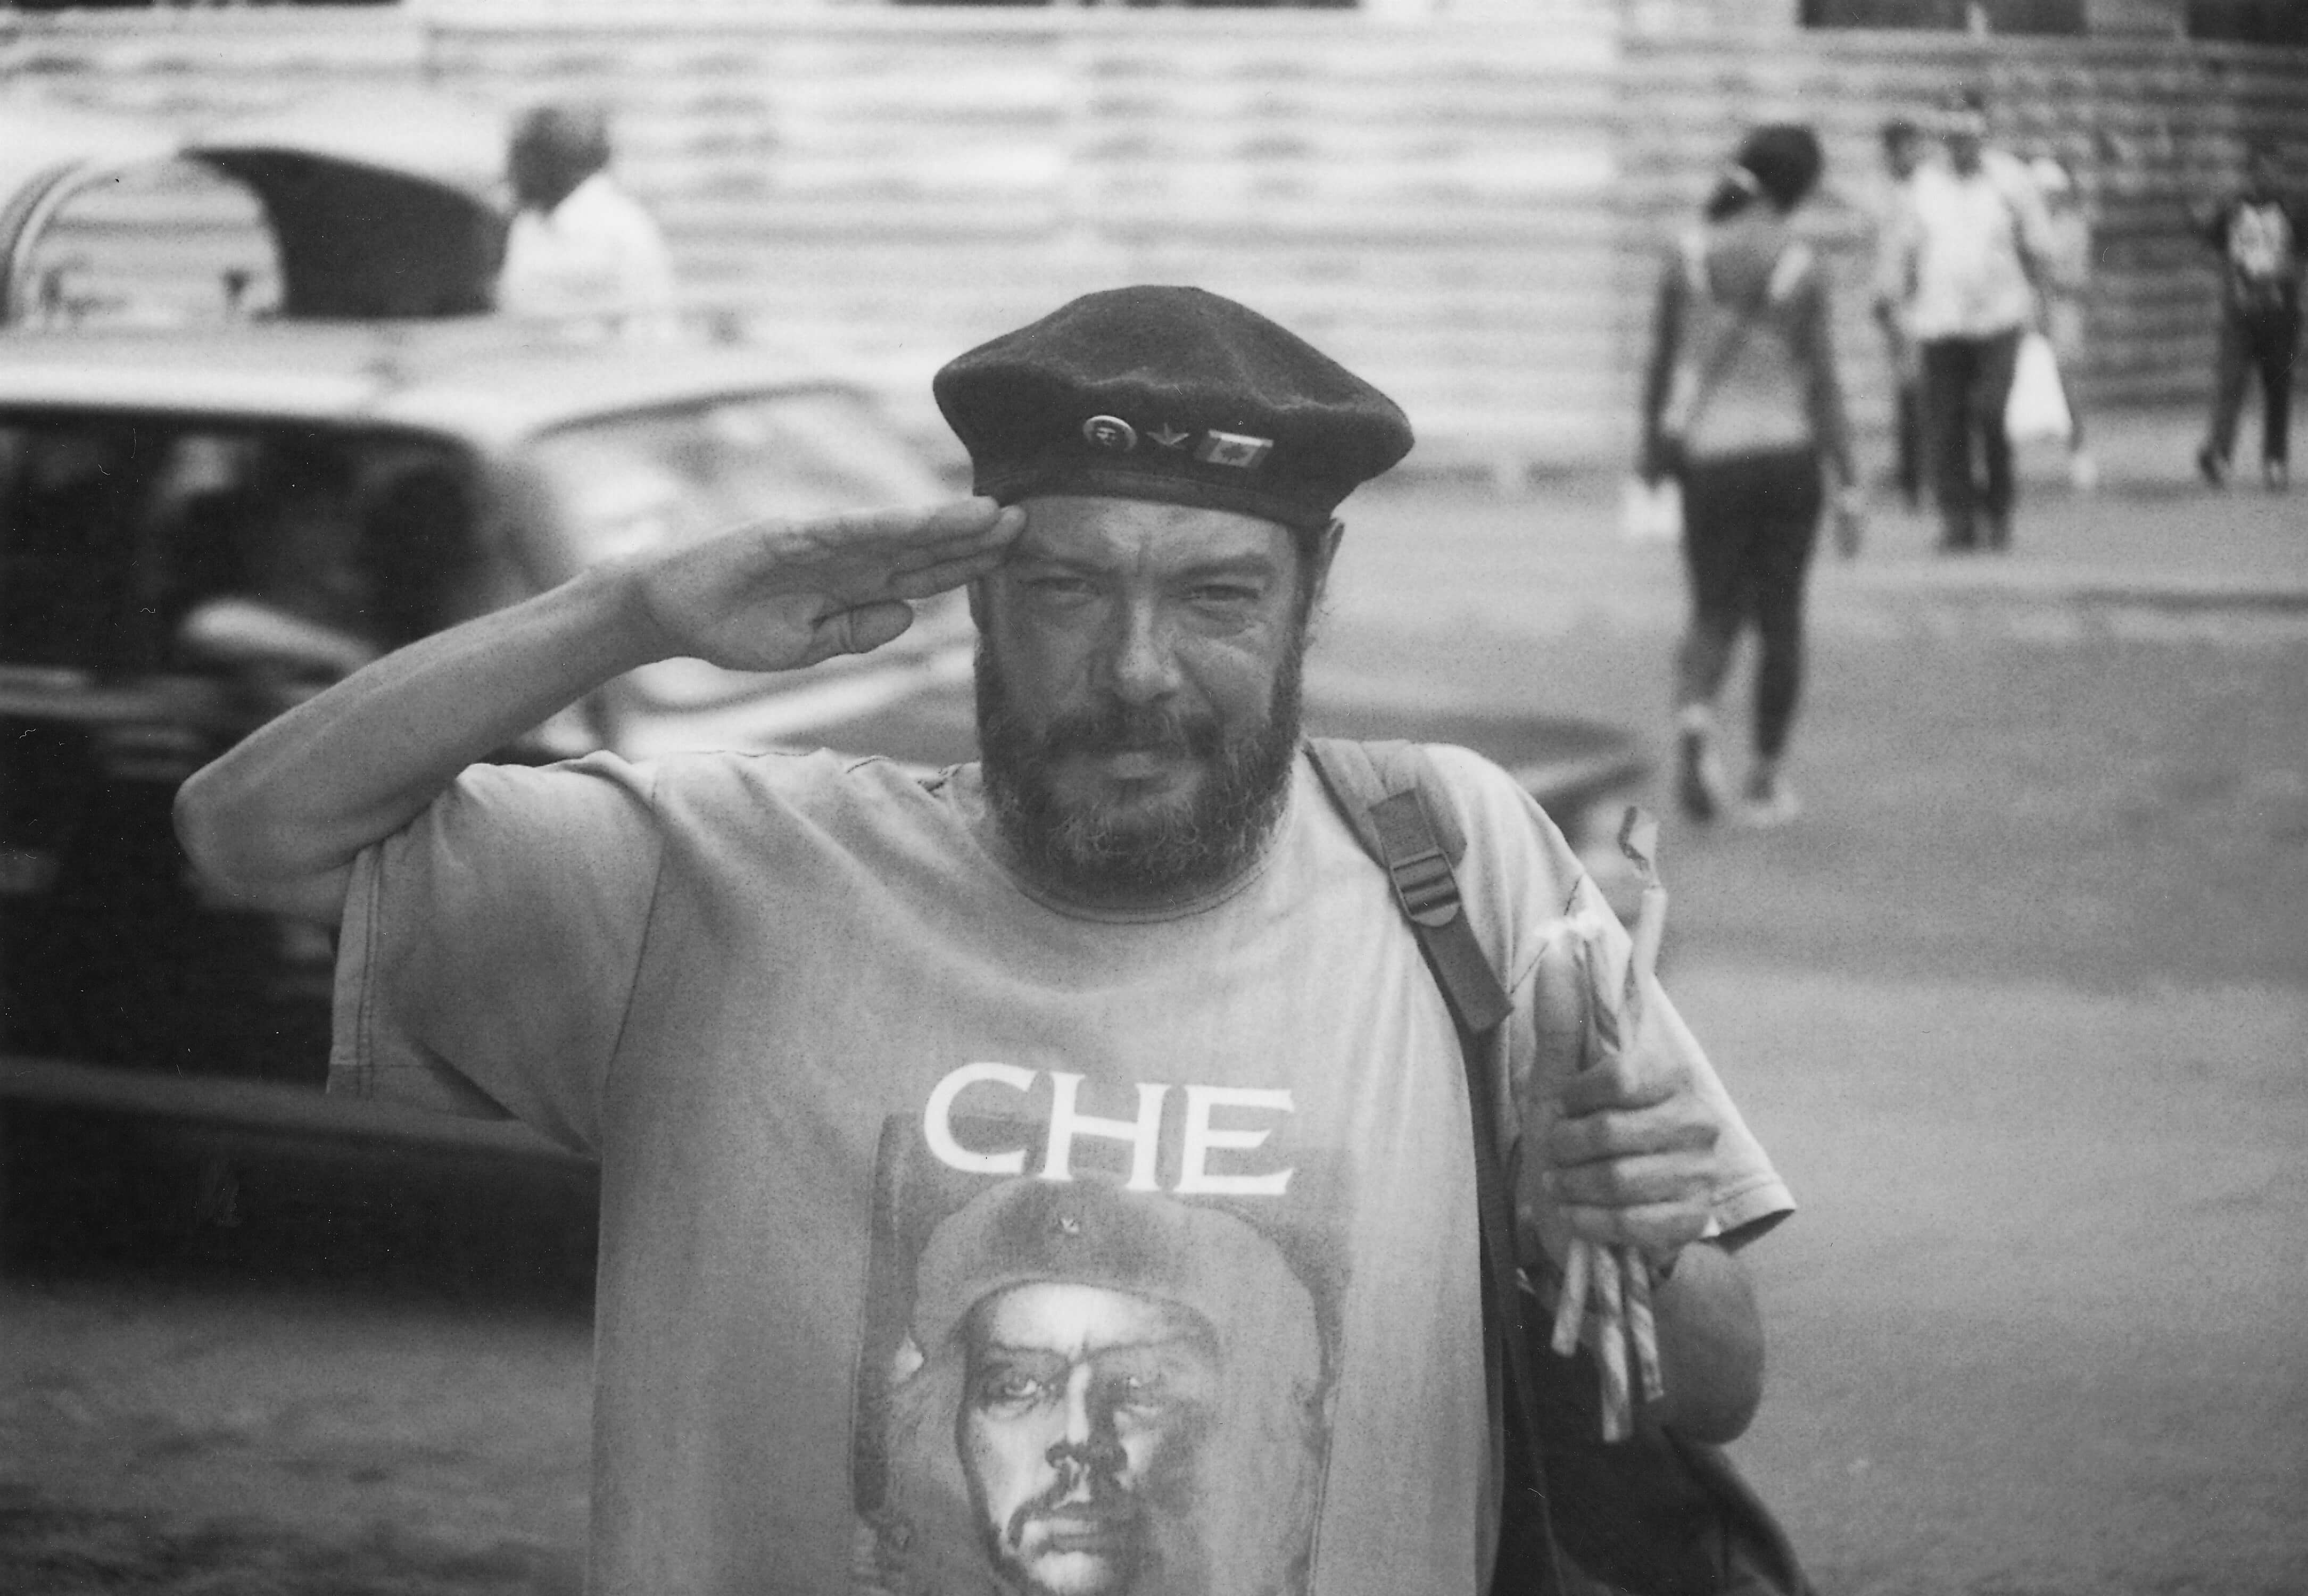 A Che loving Cuban